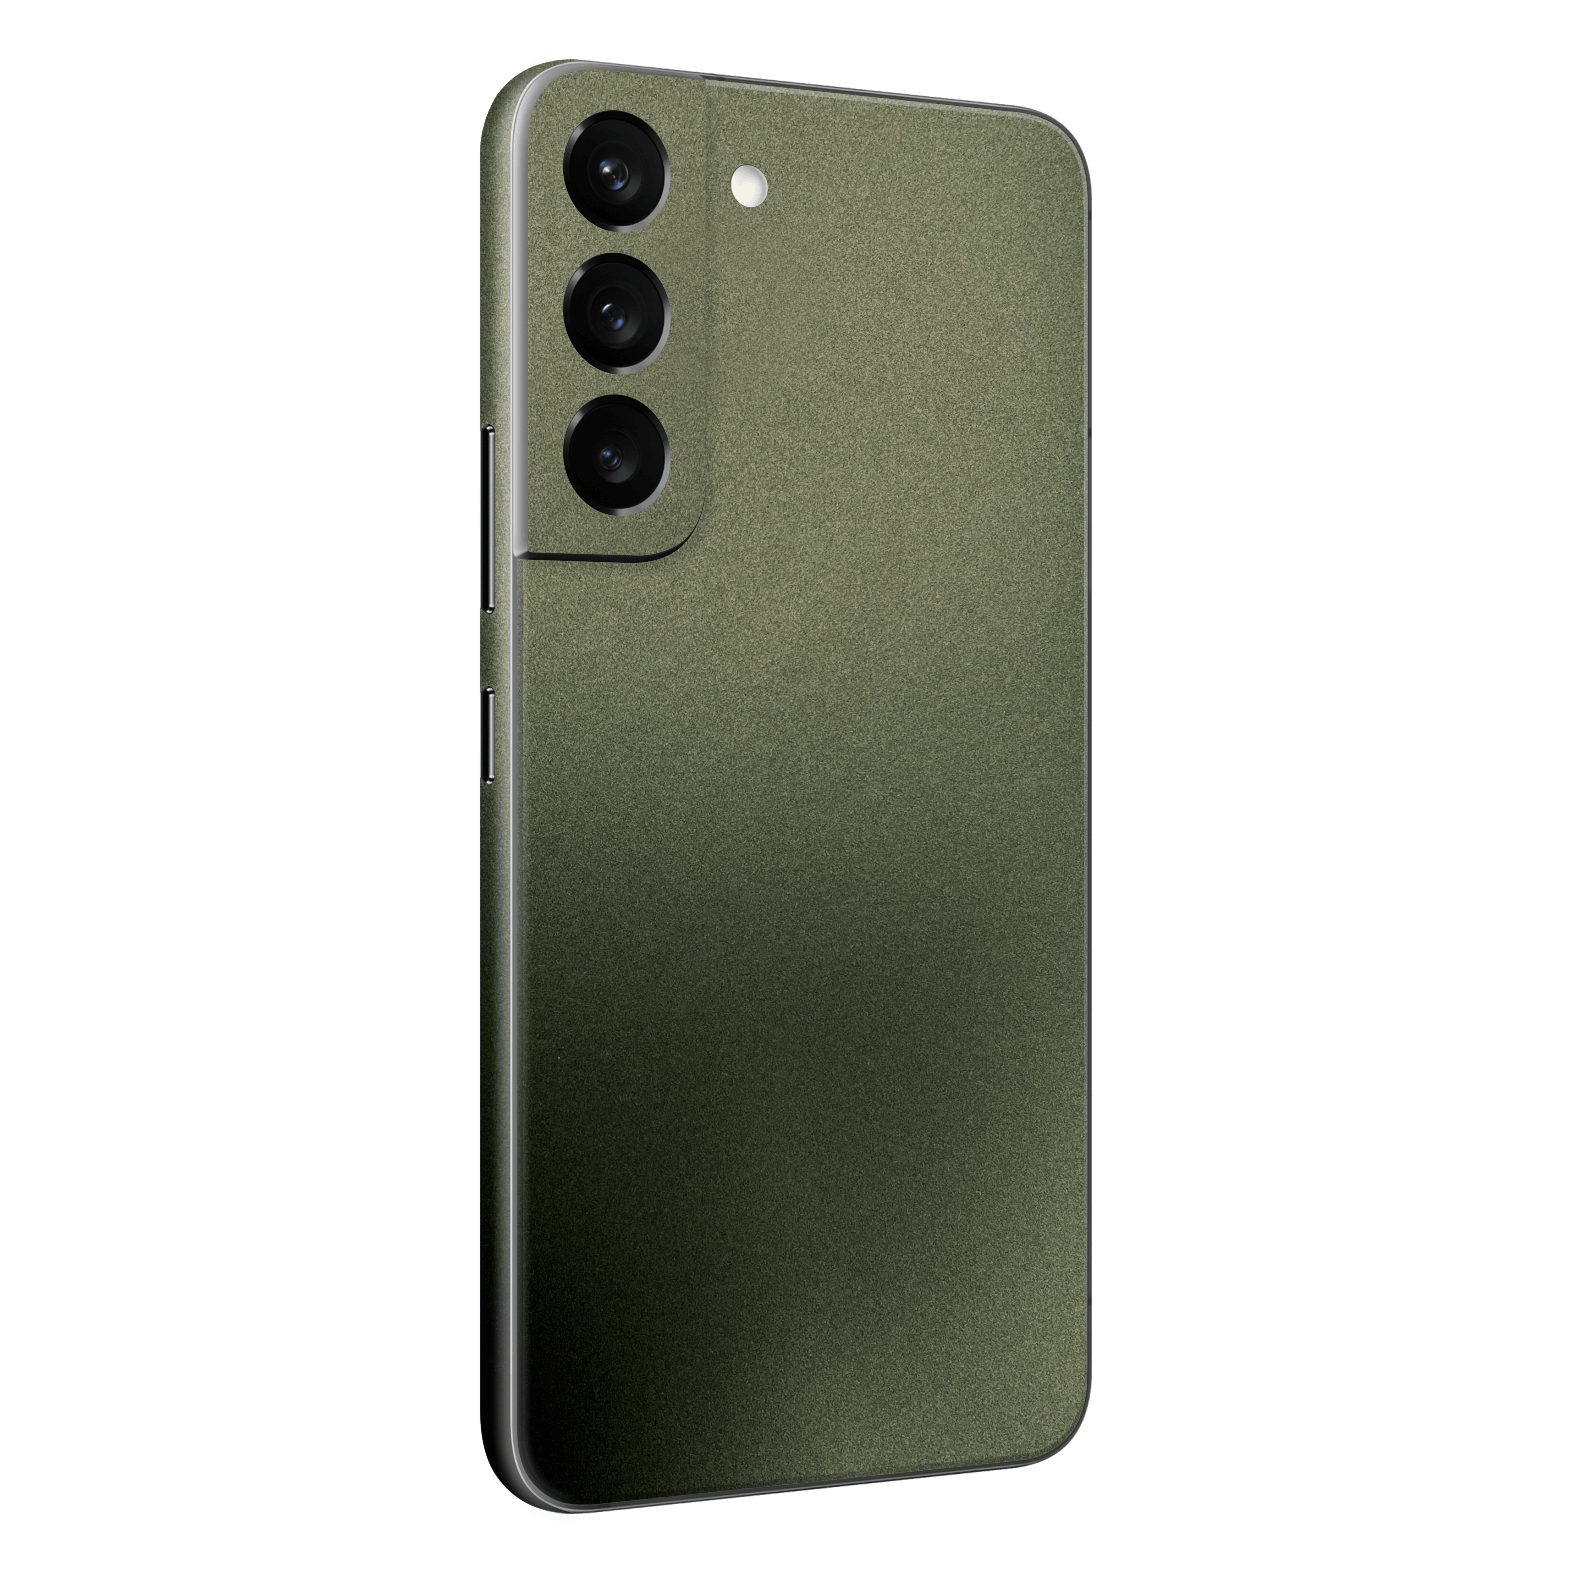 Samsung Galaxy S22+ PLUS Military Green Metallic Matt Matte Skin Wrap Sticker Decal Cover Protector by EasySkinz | EasySkinz.com